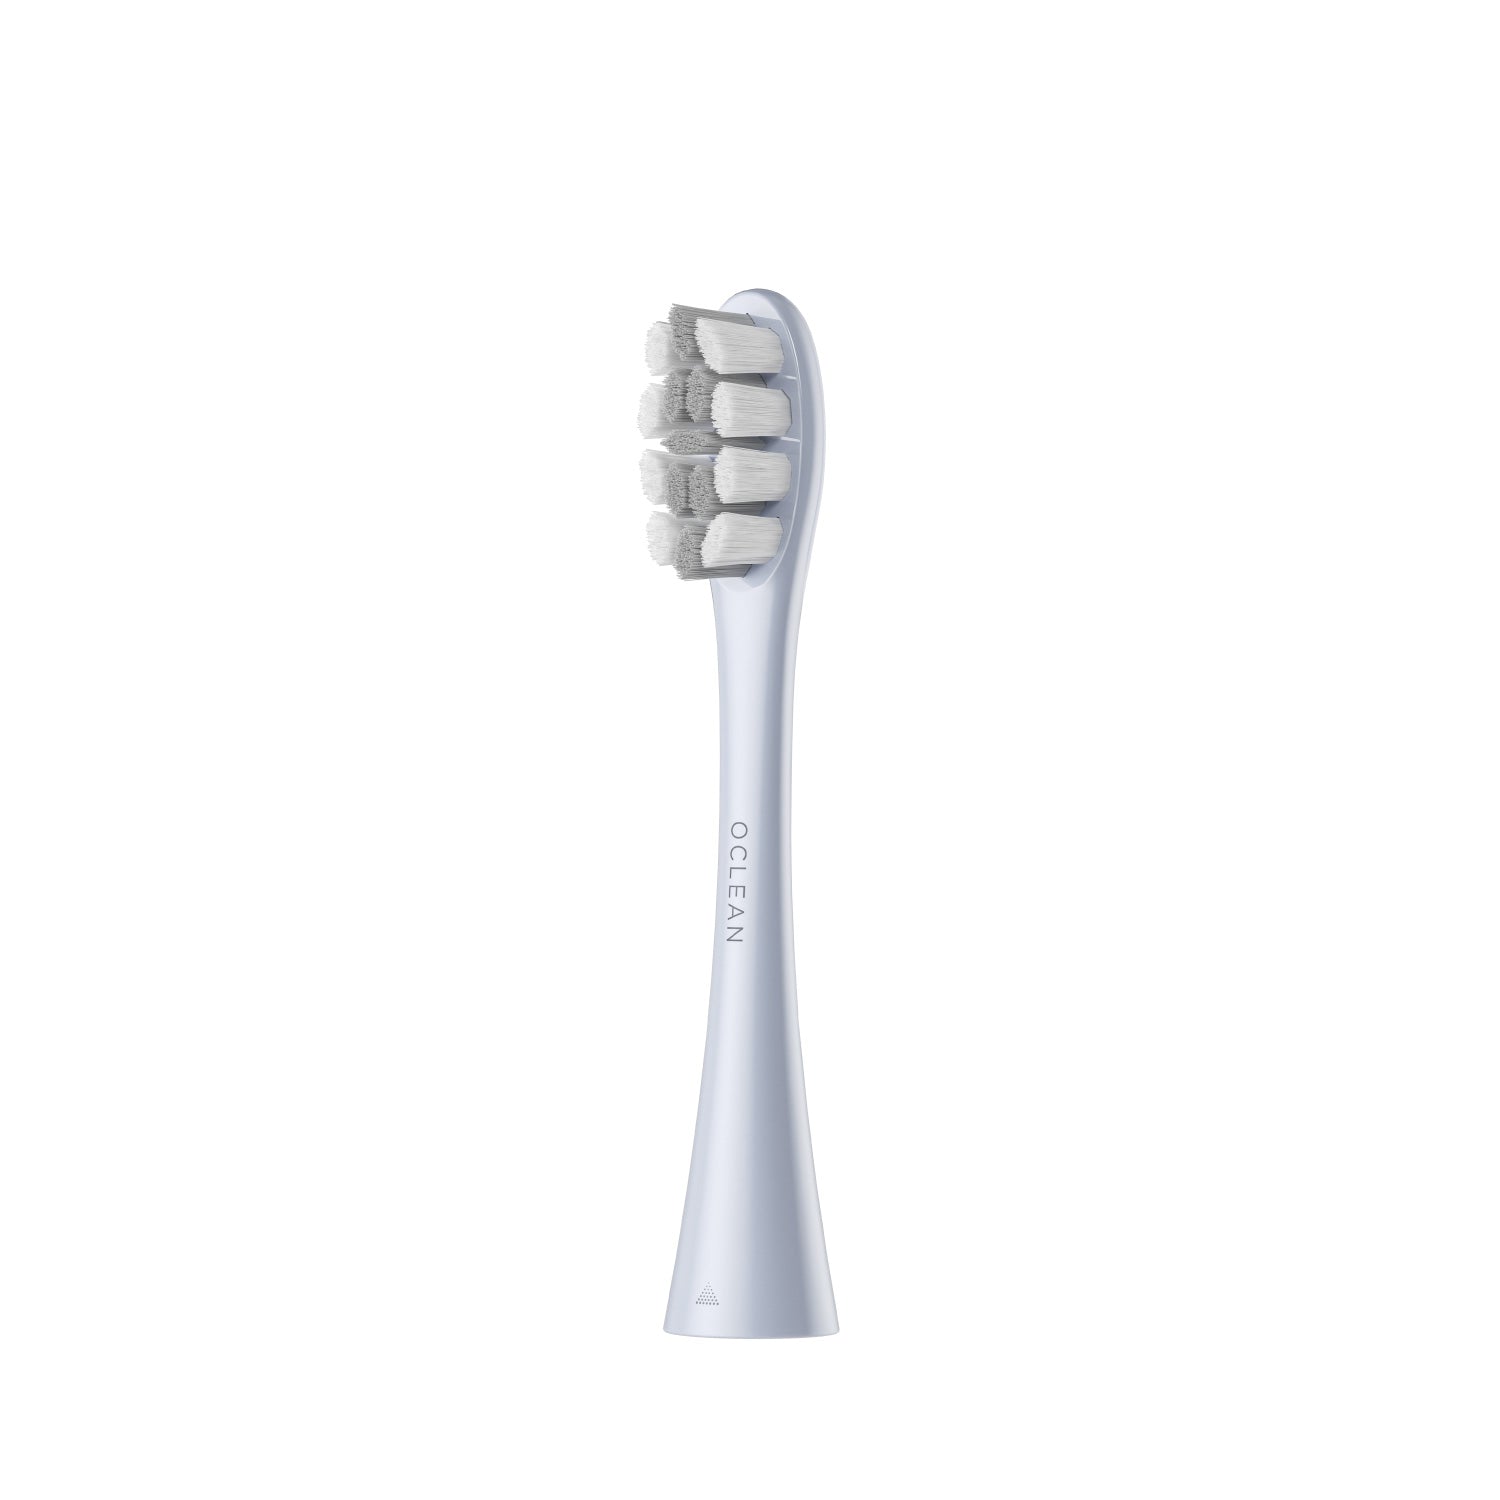 Recambios de cabezales de cepillo Oclean-Cabezales de repuesto para cepillos de dientes-Oclean Global Store